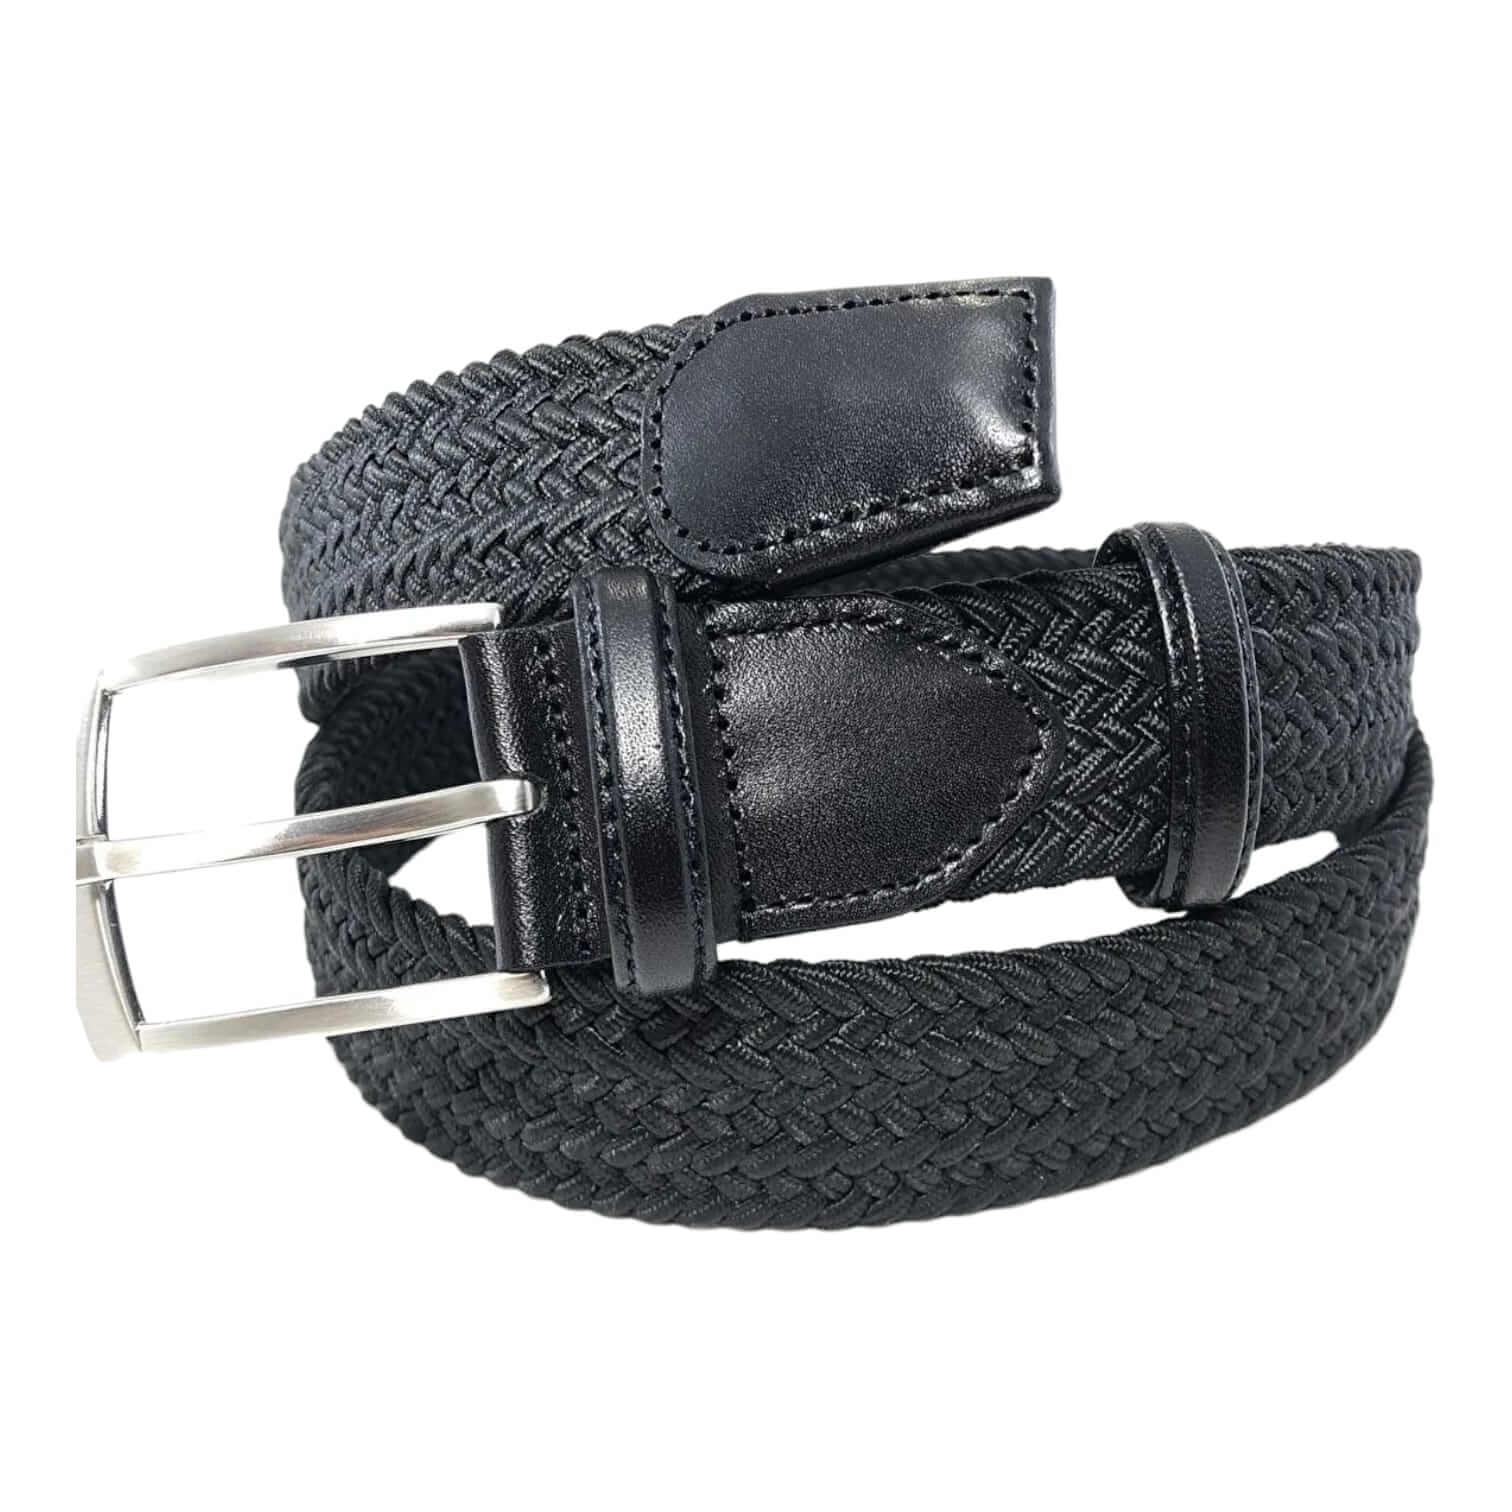 Buy Black Mens Stretchy Belt - Cotton Leather - LeatherBeltsOnline.com